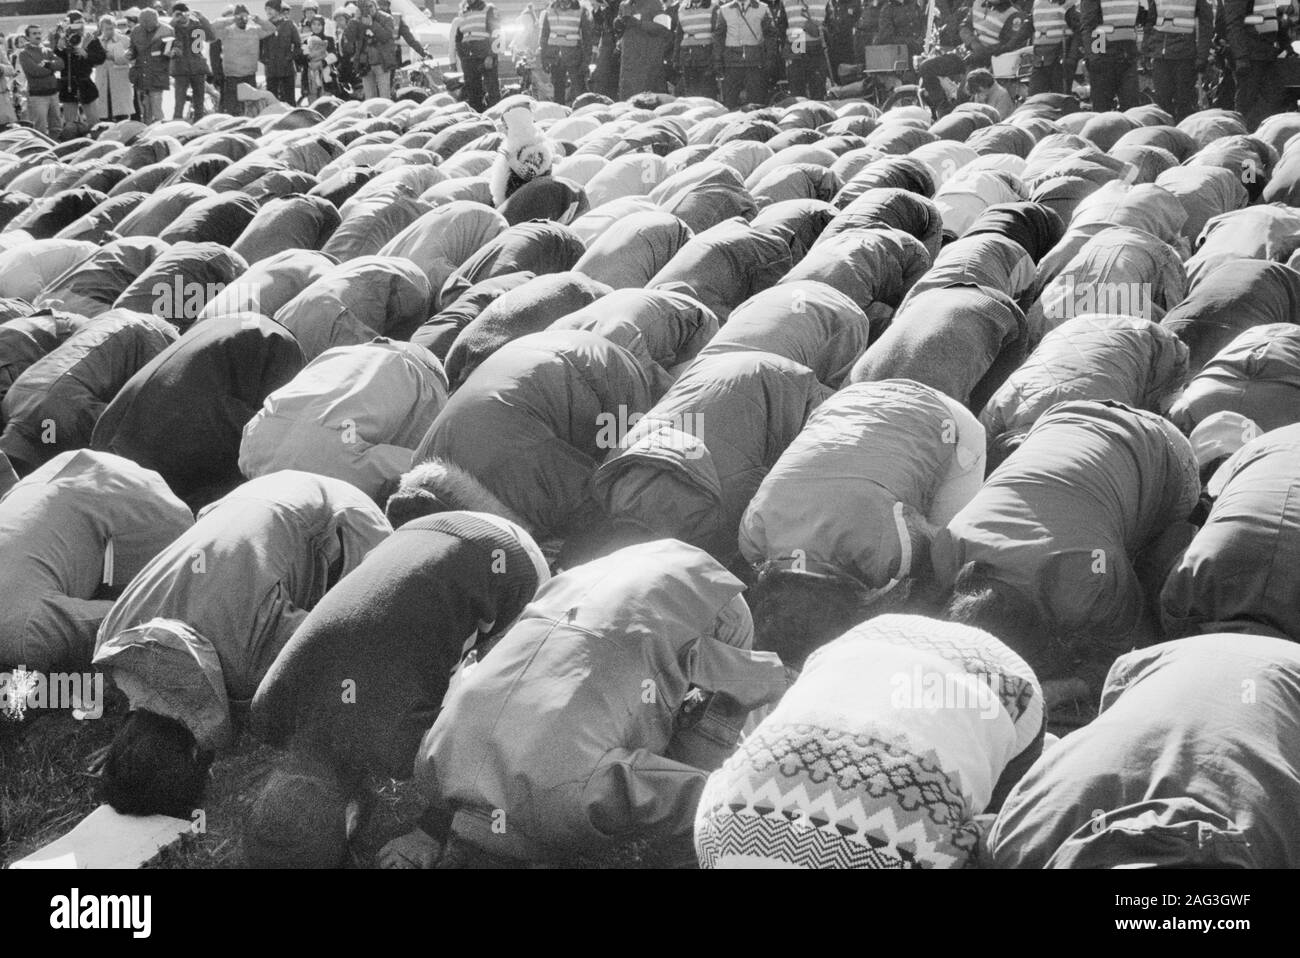 Men bowing in prayer at an Iran Hostage Crisis student demonstration, Washington, D.C., USA, photograph by Marion S. Trikosko, November 30, 1979 Stock Photo